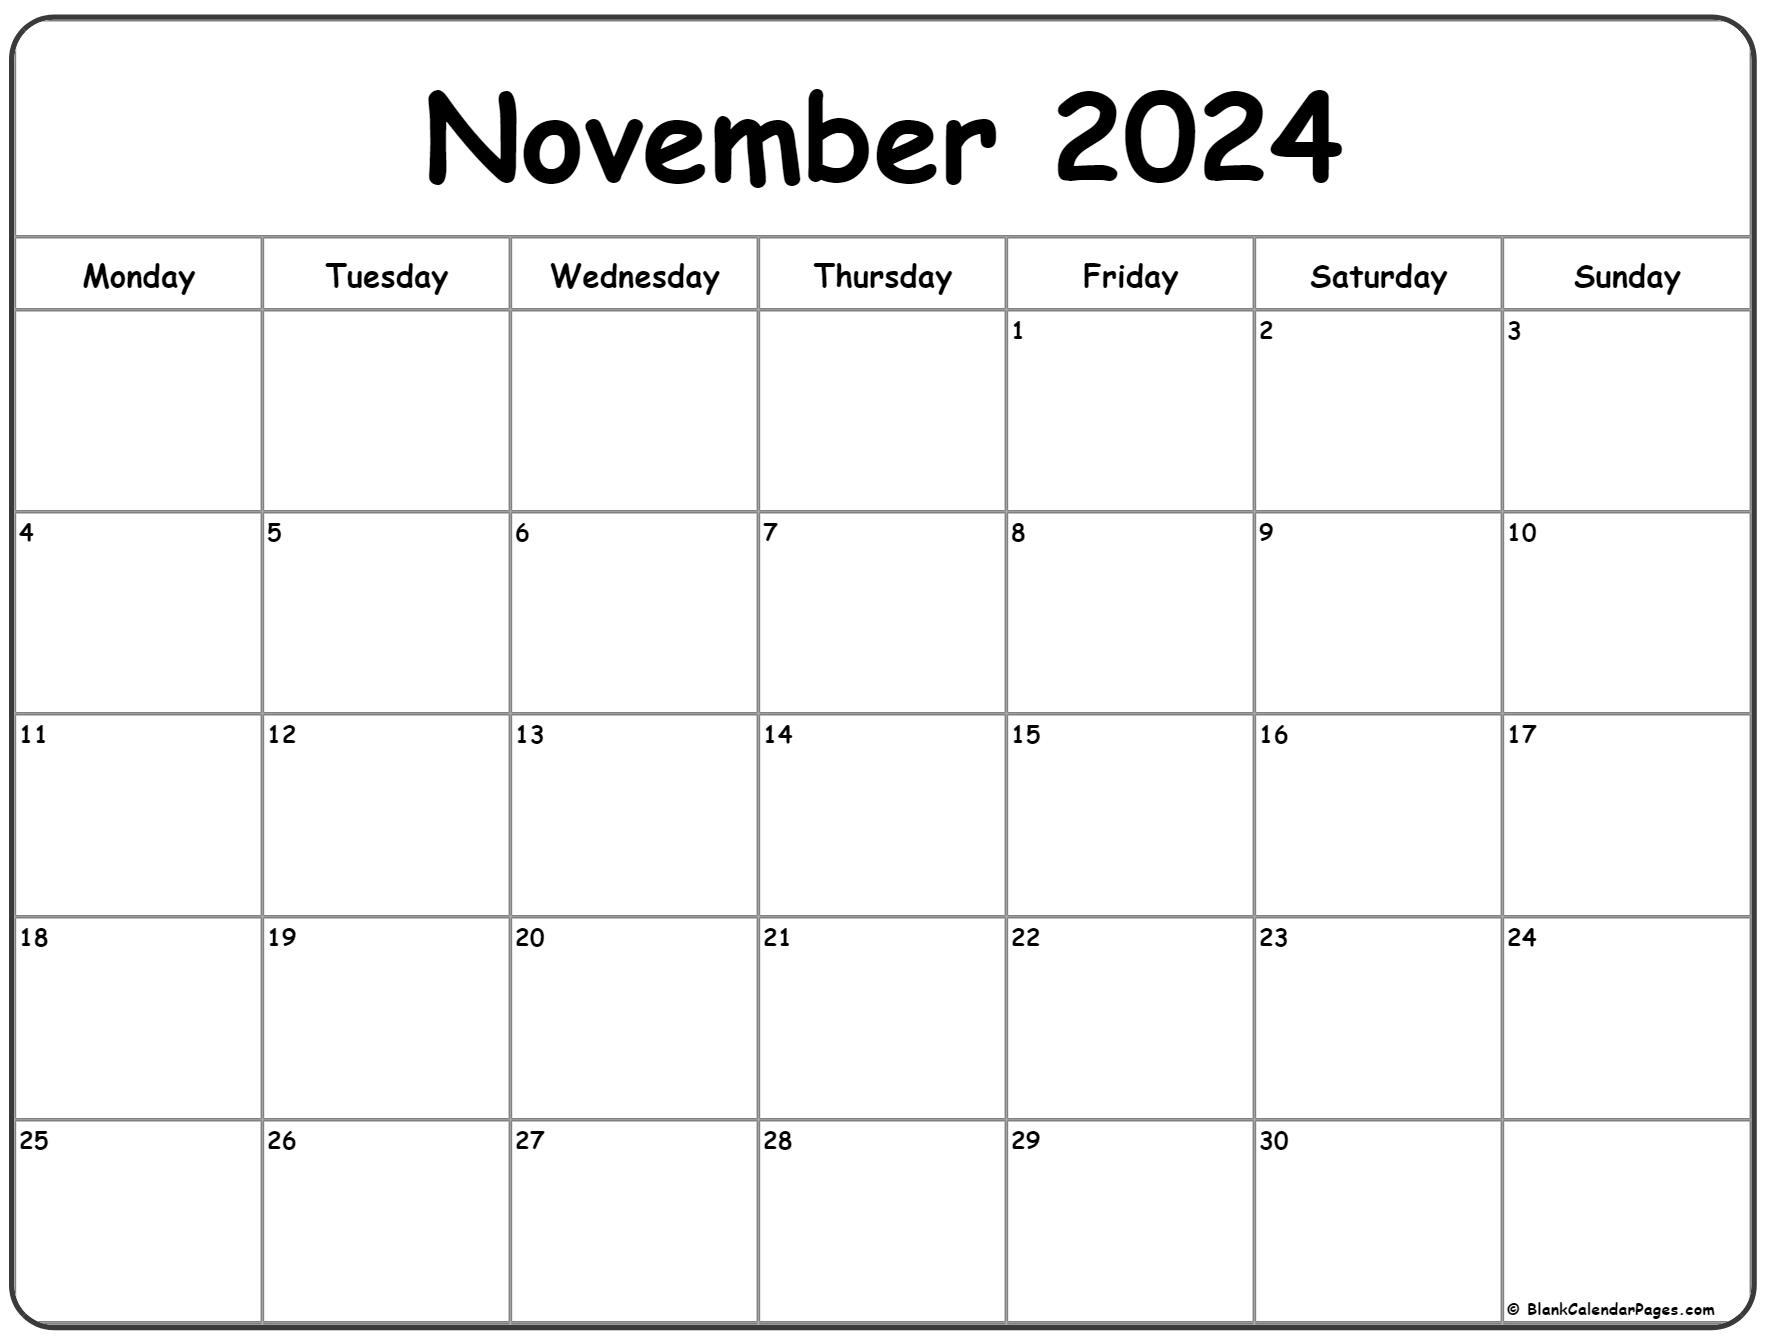 November 2022 Monday calendar. Monday to Sunday